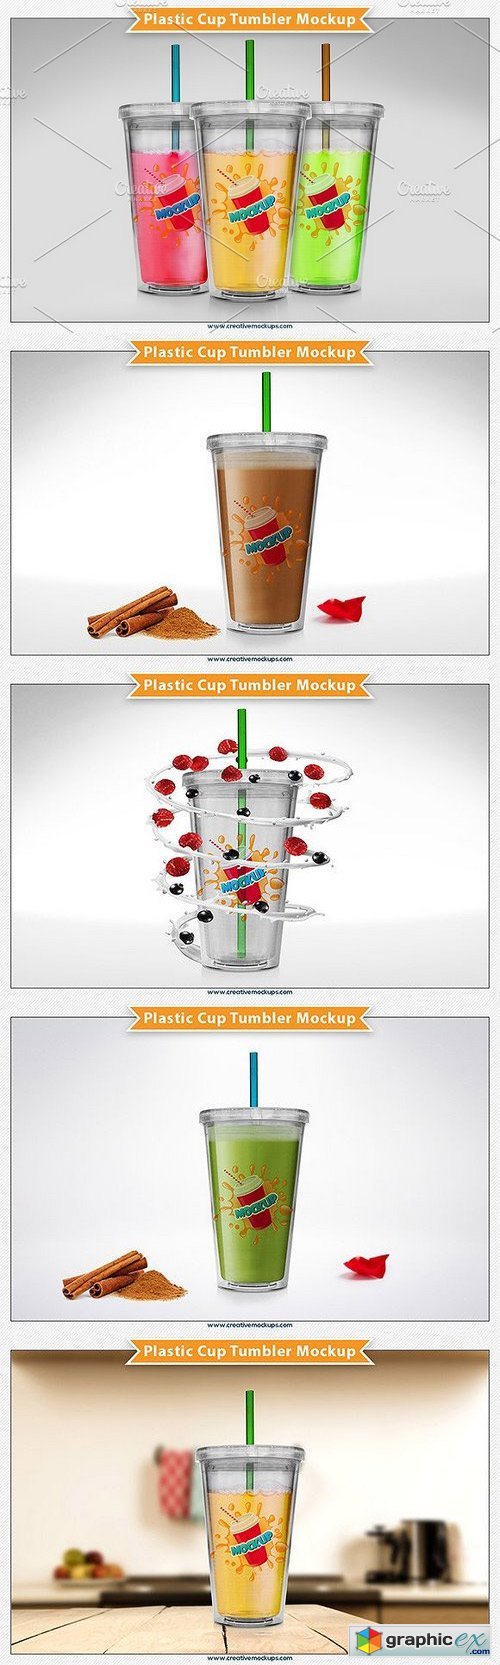 Plastic Cup Tumbler Mockup